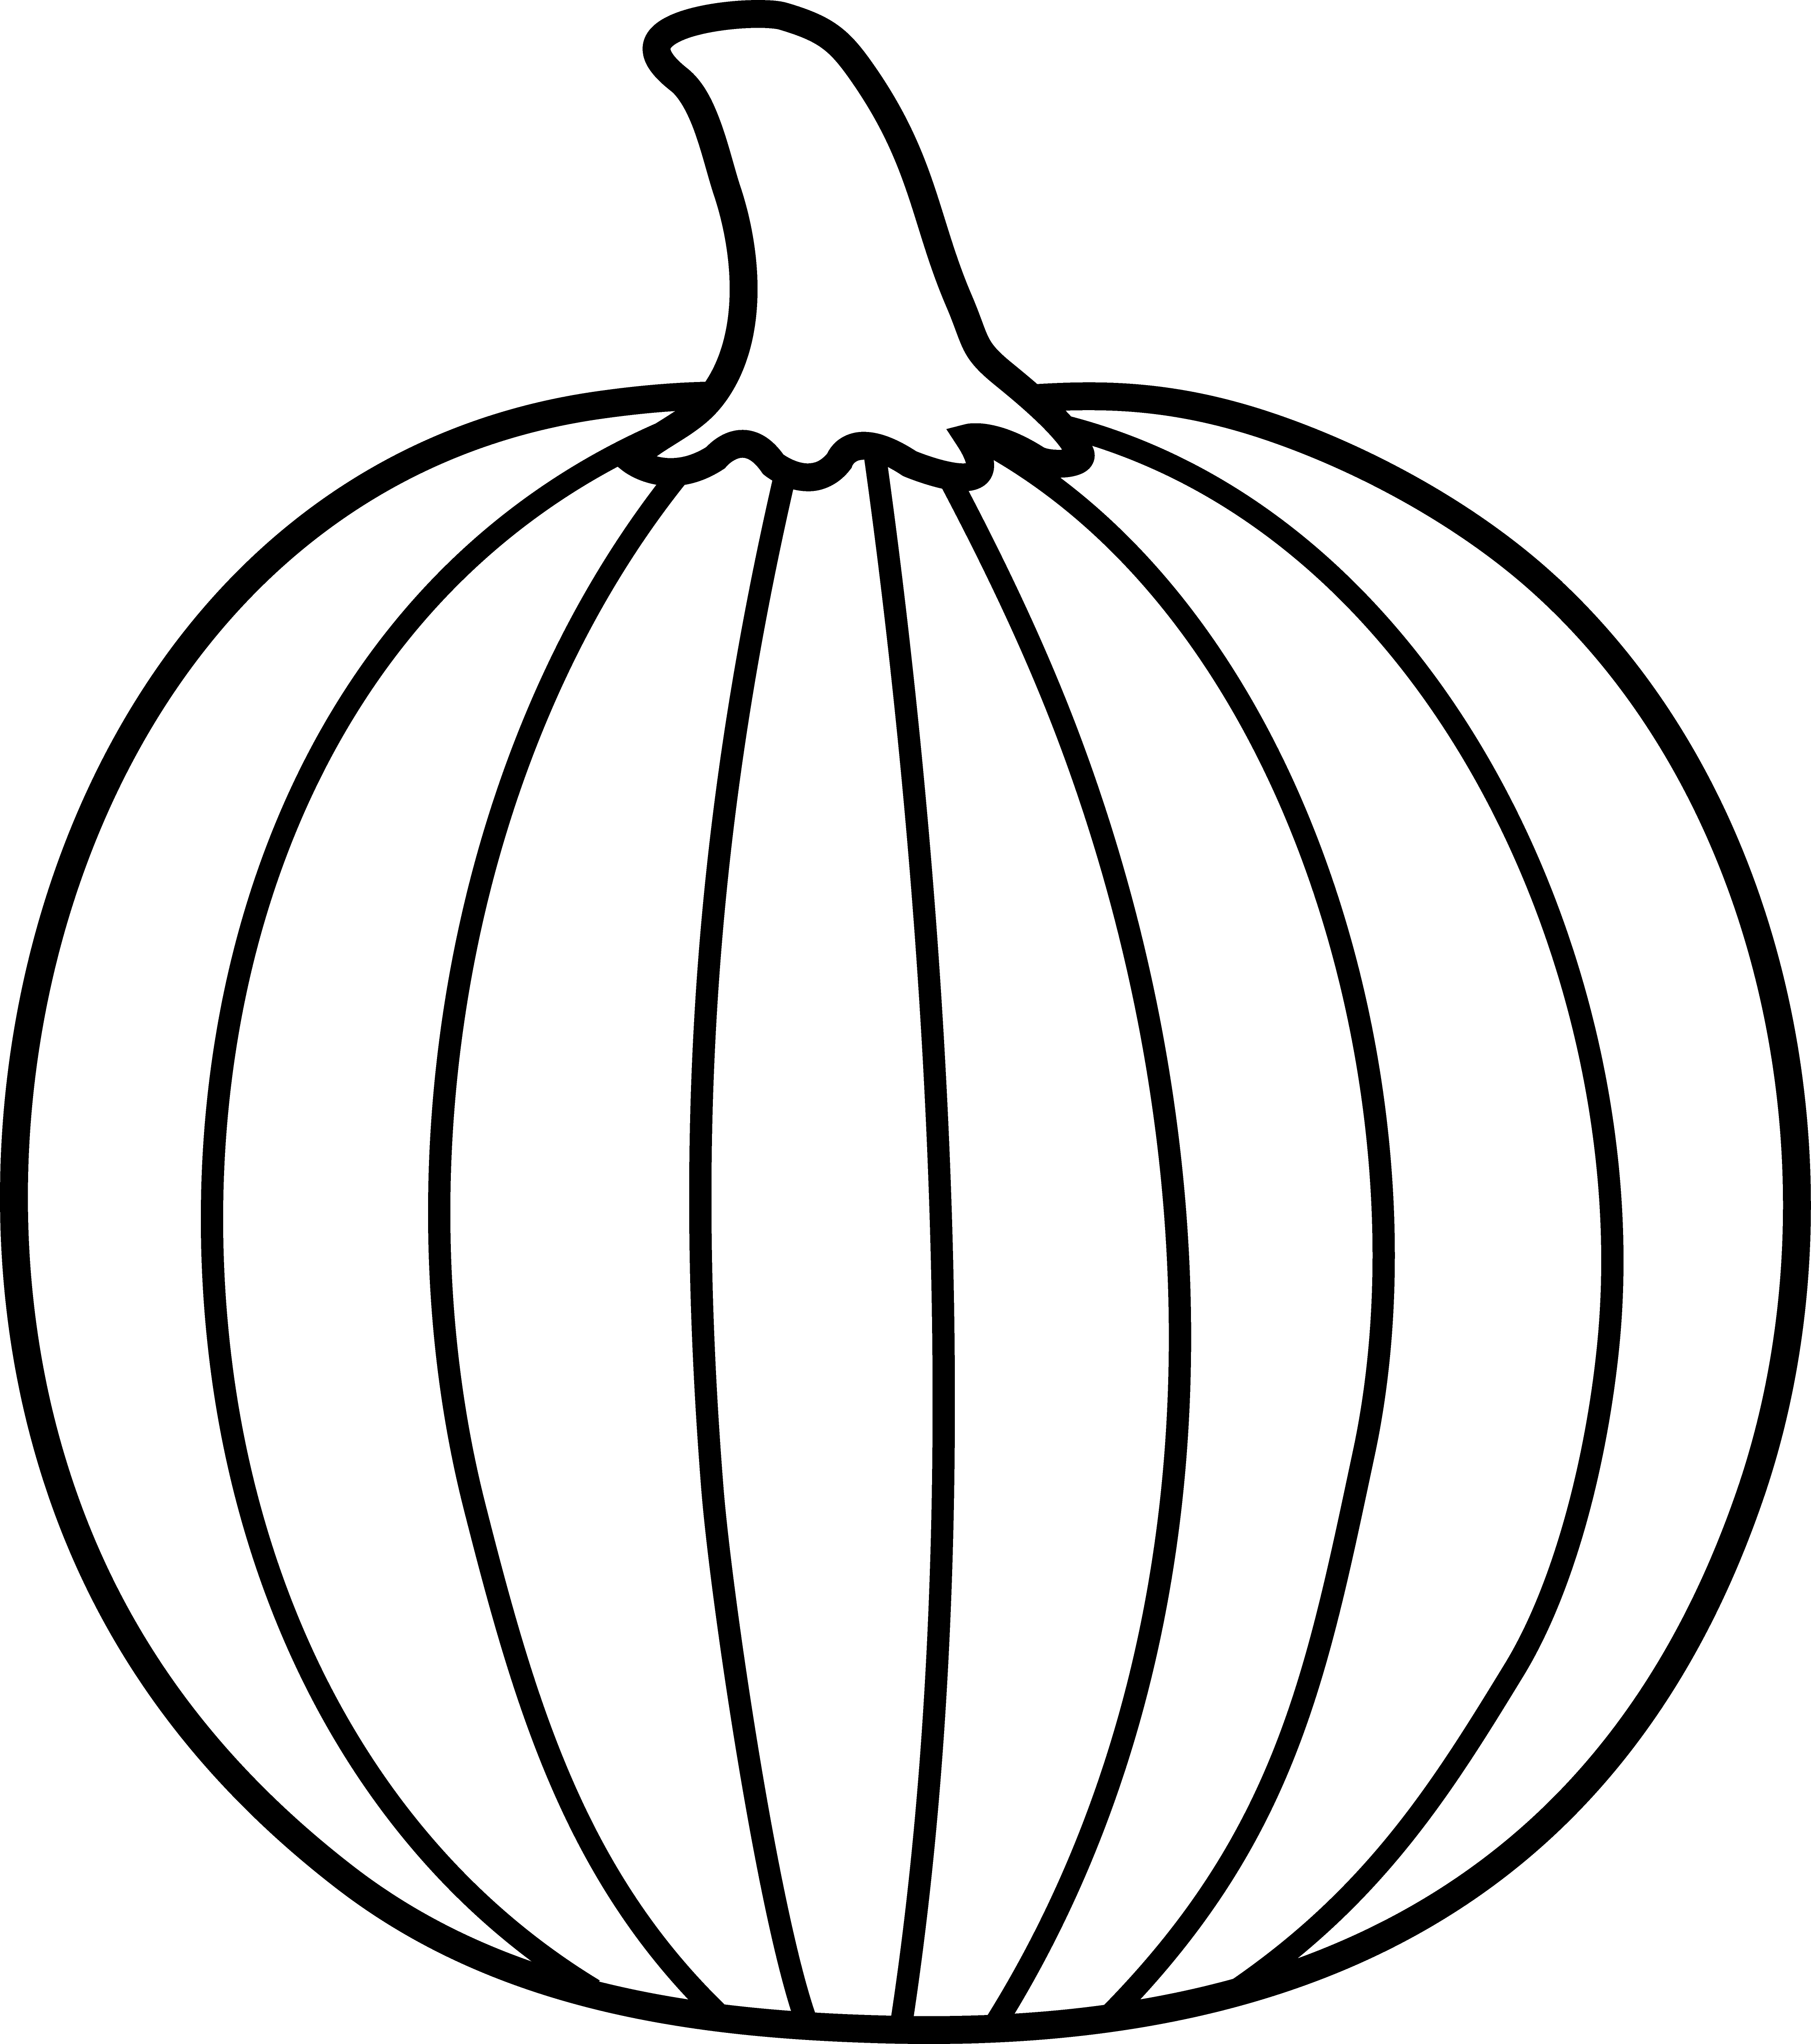 Black and White Pumpkin Lineart - Free Clip Art